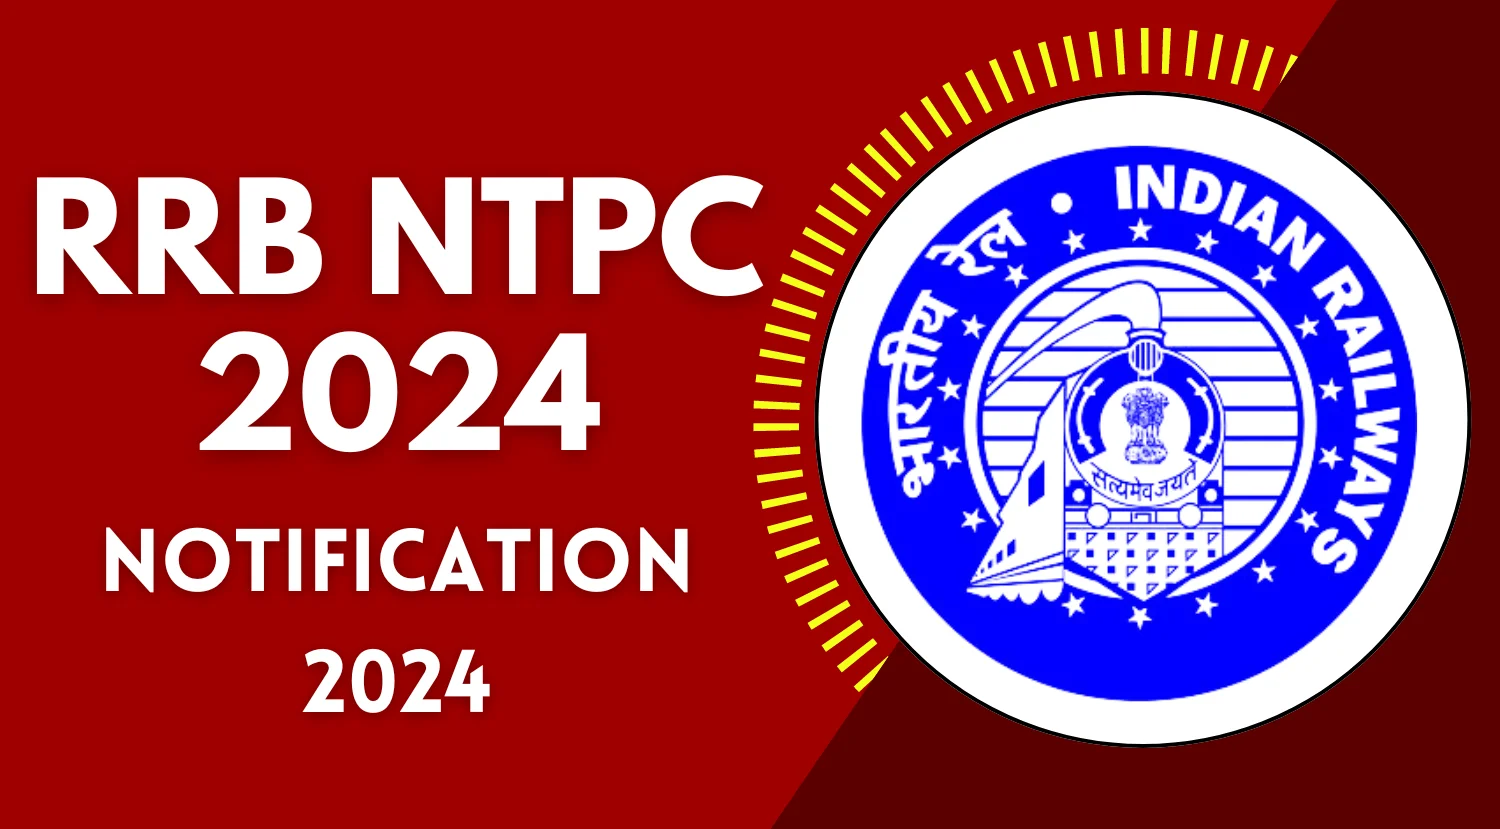 RRB NTPC 2024 Notification